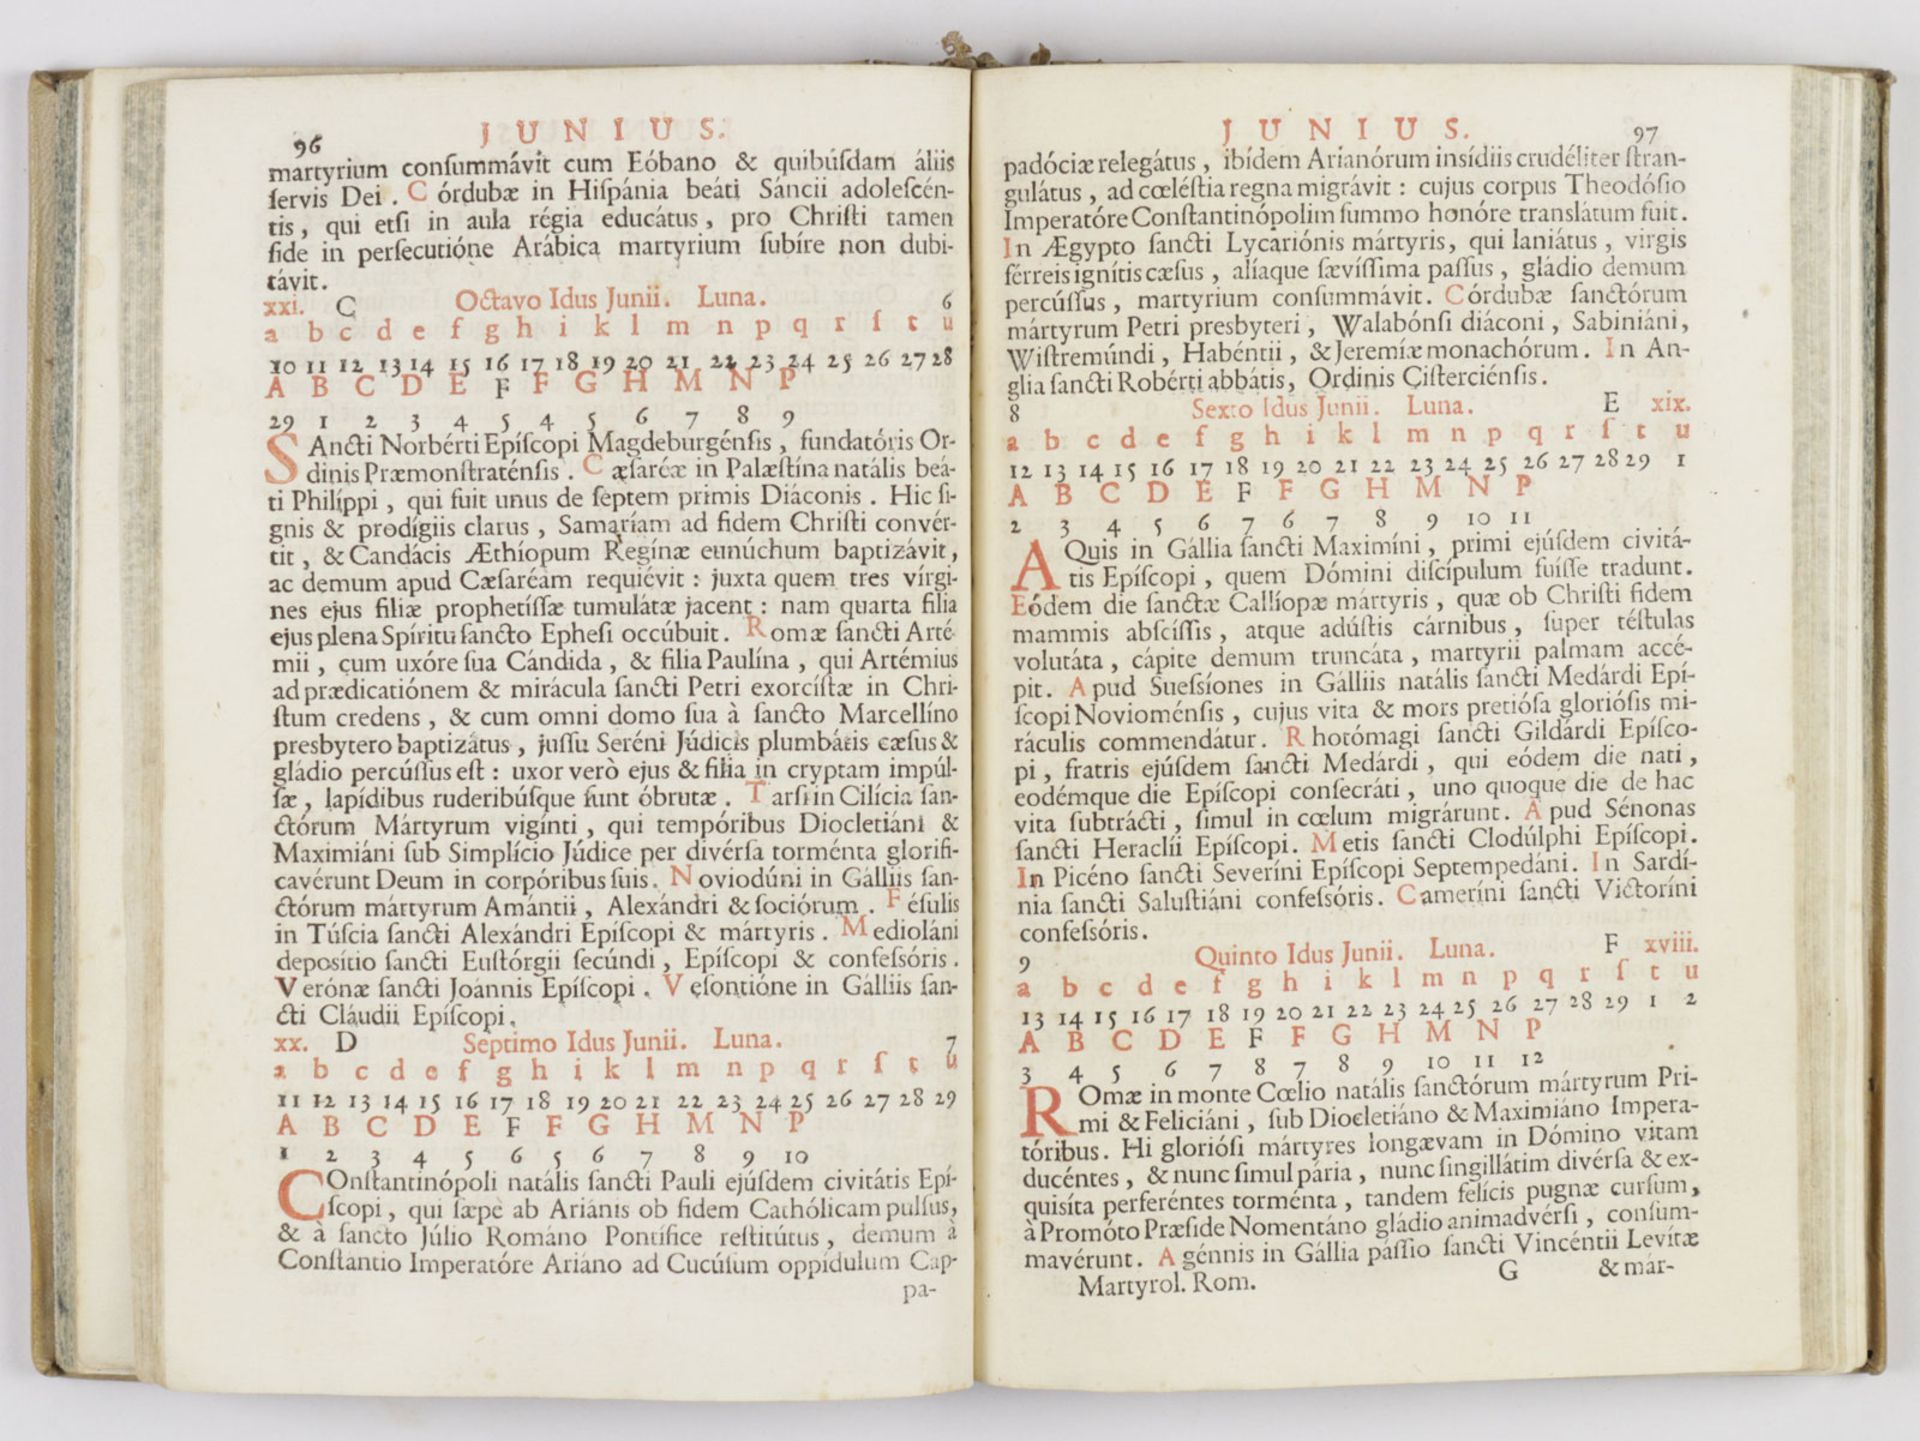 Martyrologium Romanum Gregorii XIII - Image 5 of 7